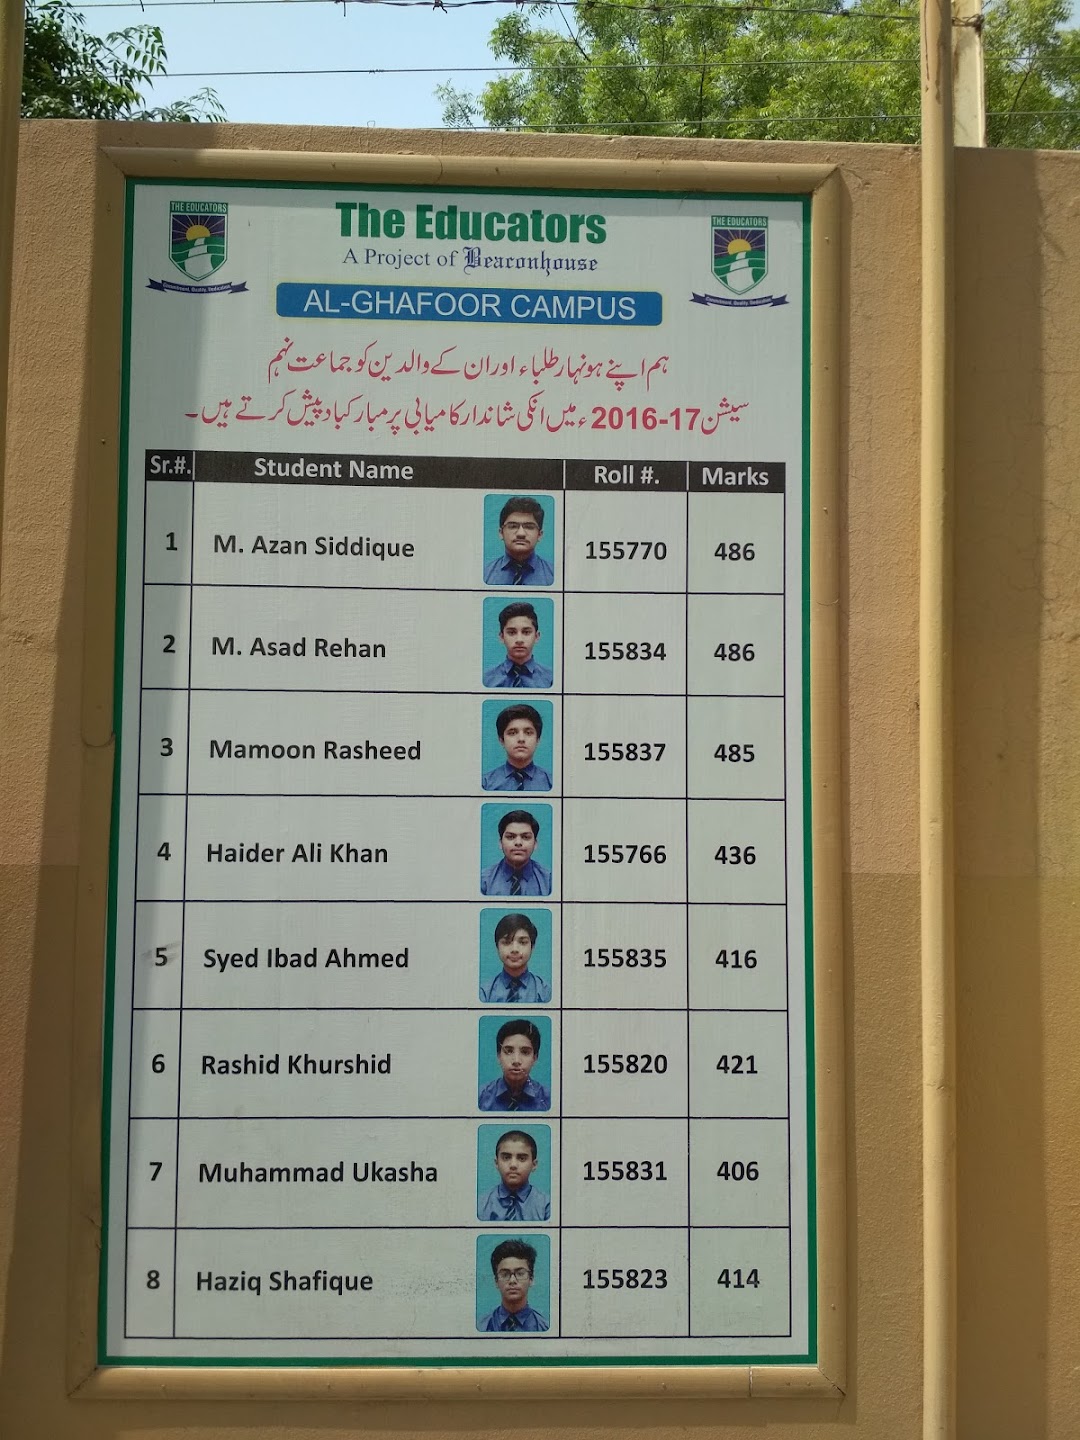 The educators